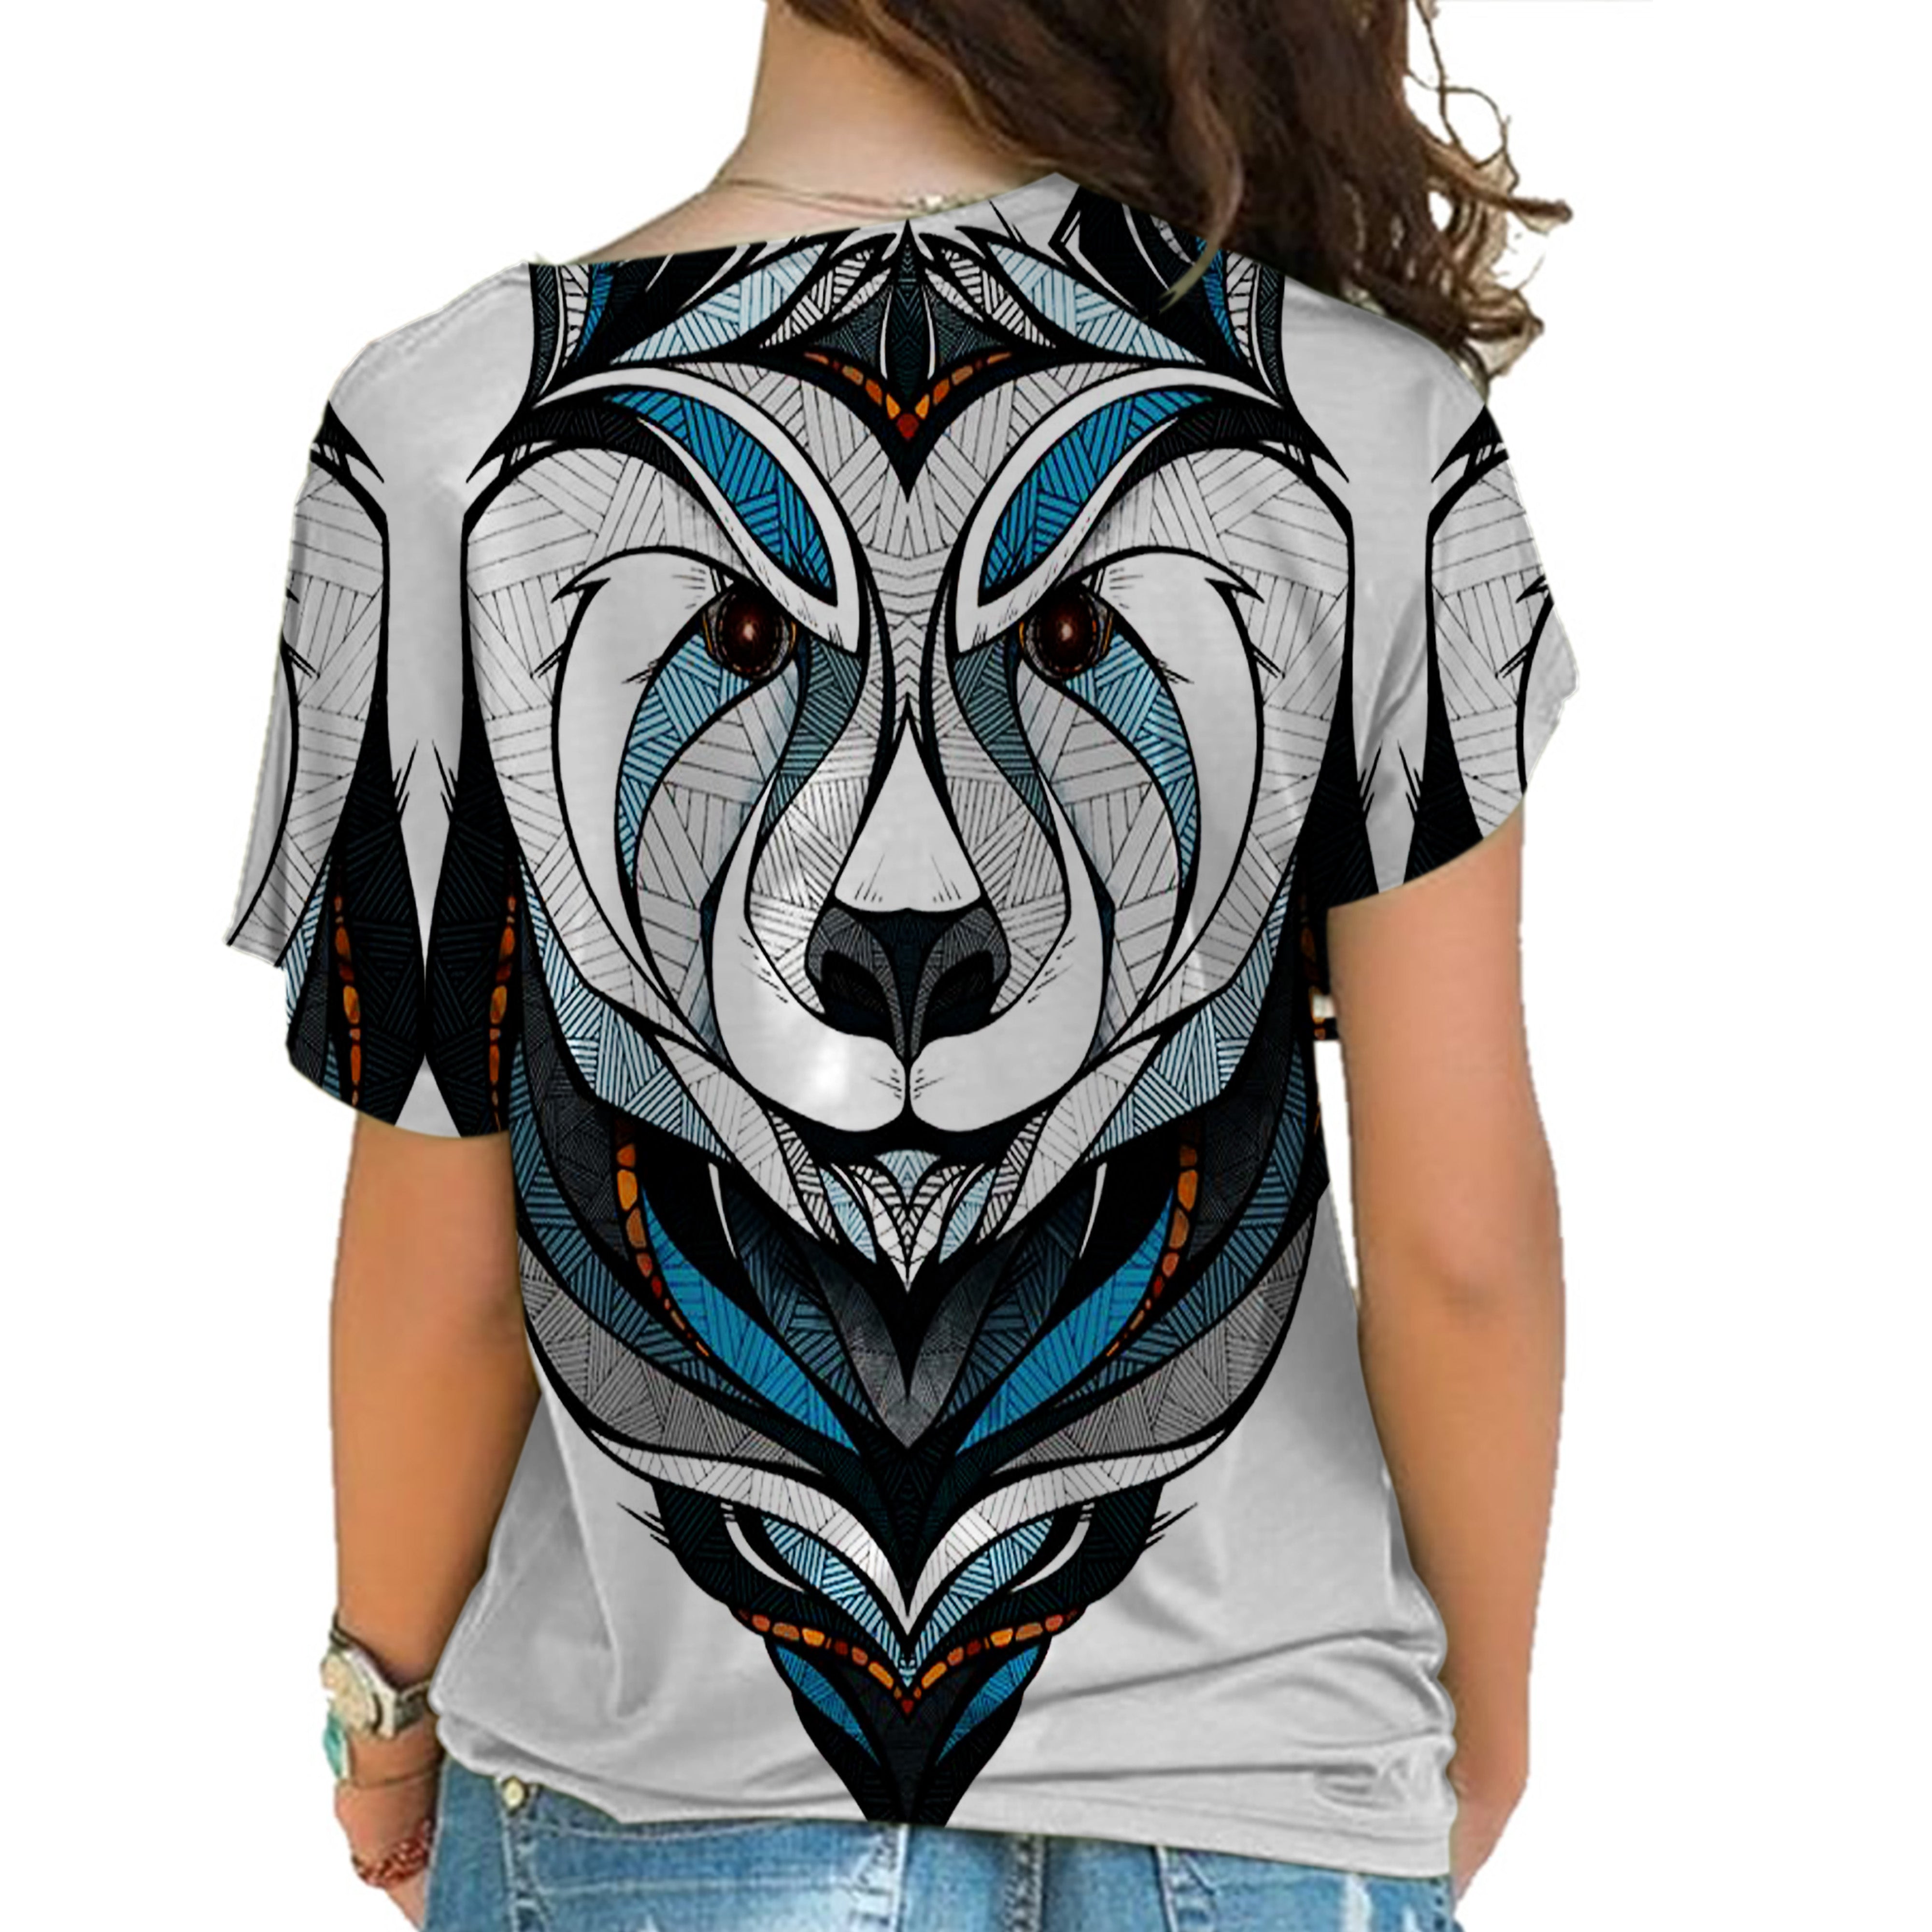 Powwow Store native american cross shoulder shirt 1129